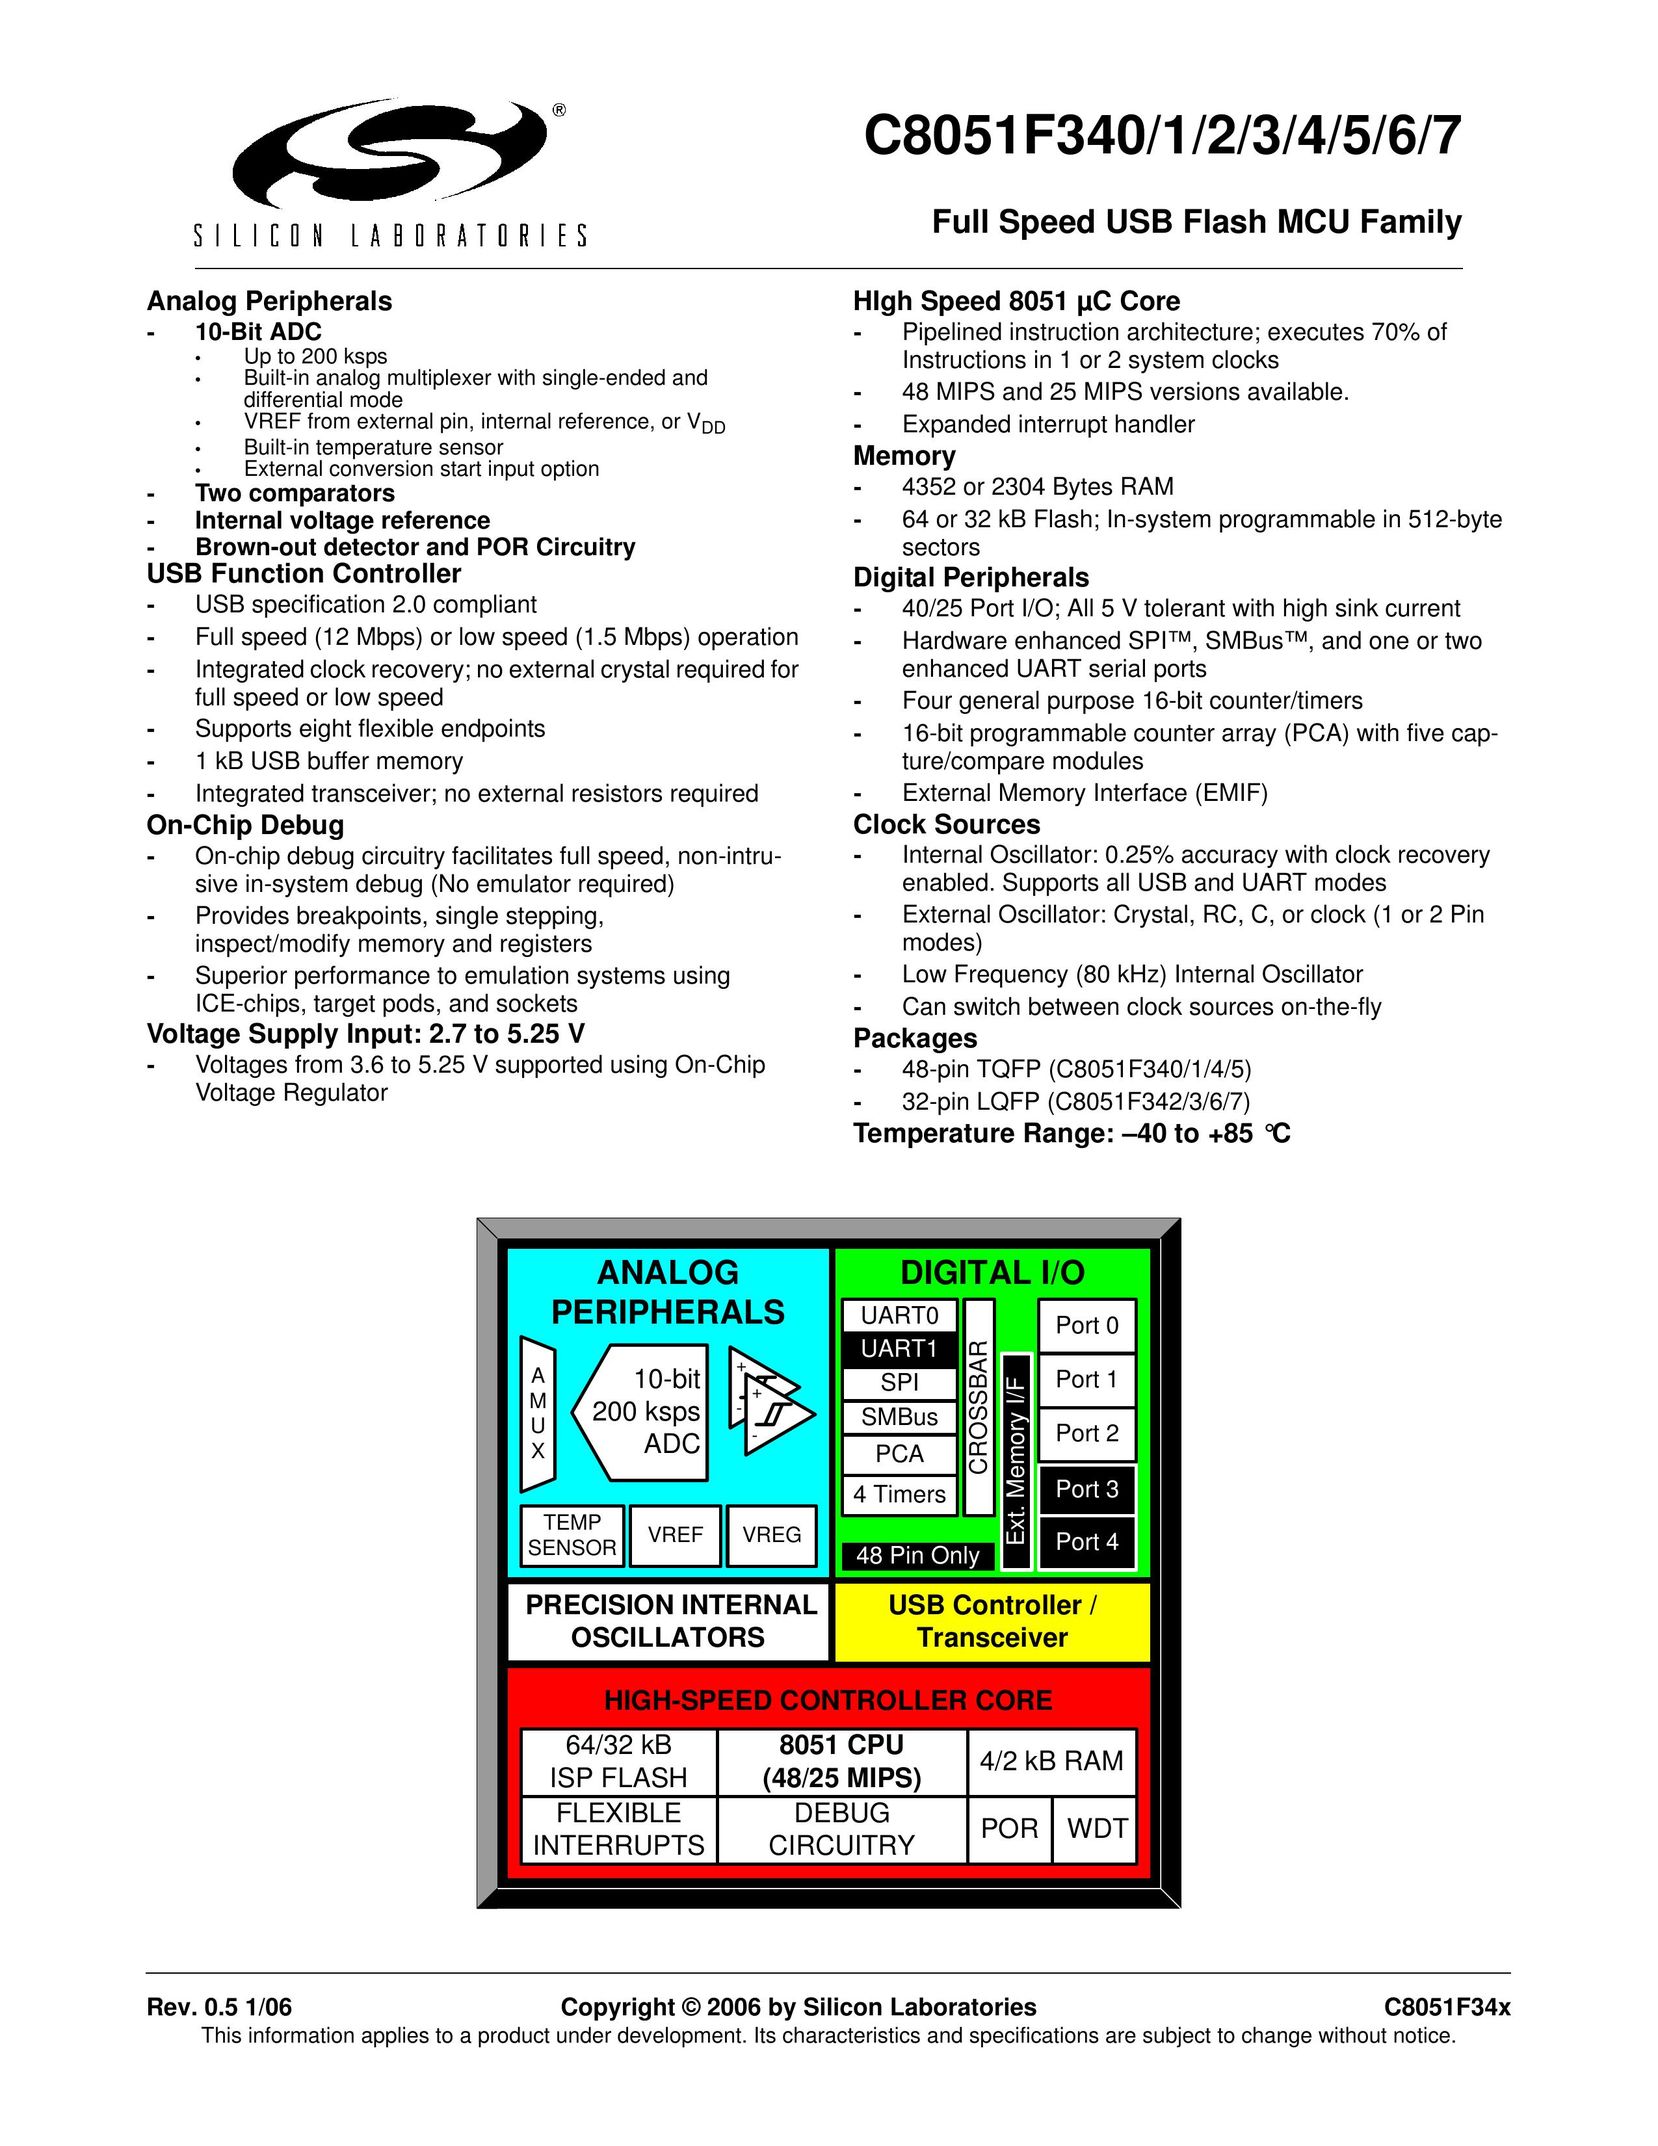 Silicon Laboratories C8051F345 Two-Way Radio User Manual